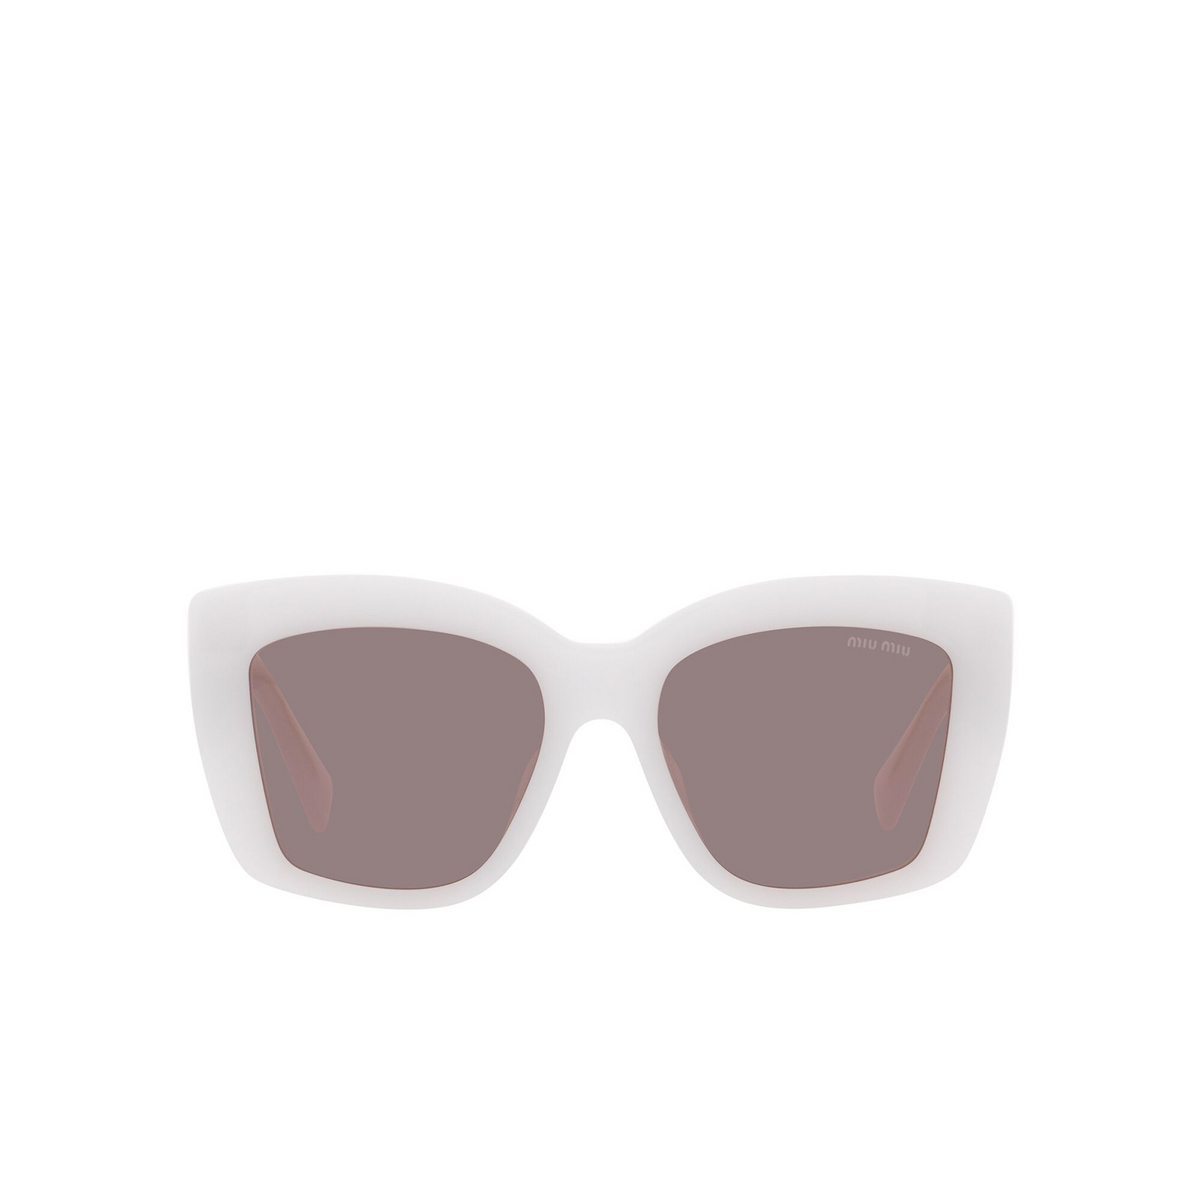 Miu Miu® Square Sunglasses: MU 04WS color White Opal 05X05P - front view.